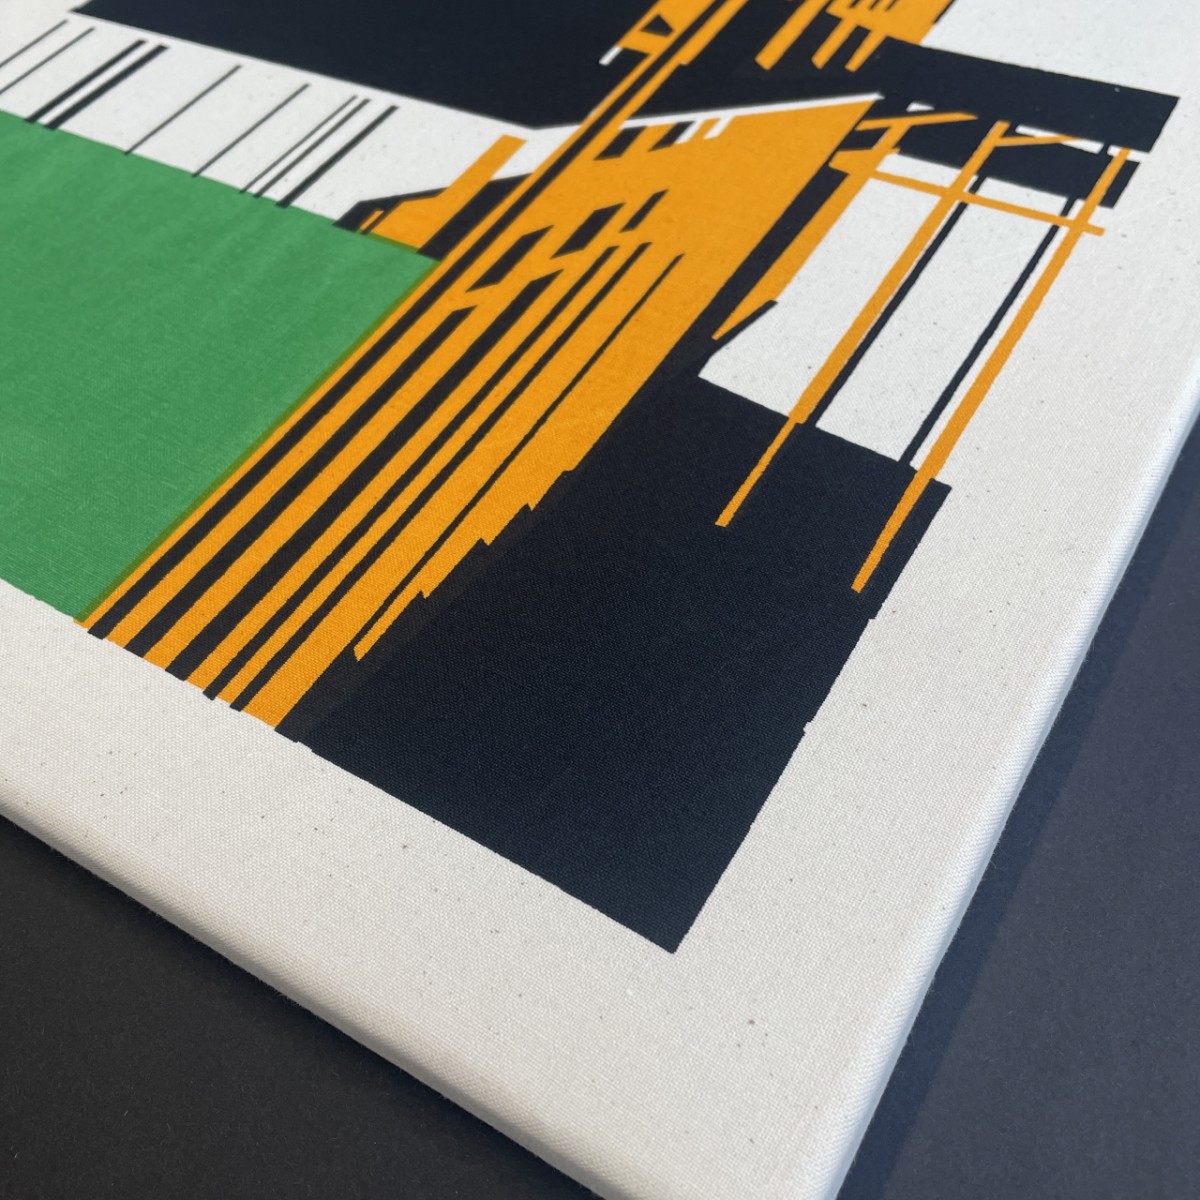 Print now - Riot later ● Abstract Architecture #02, Stoffsiebdruck auf Leinwand